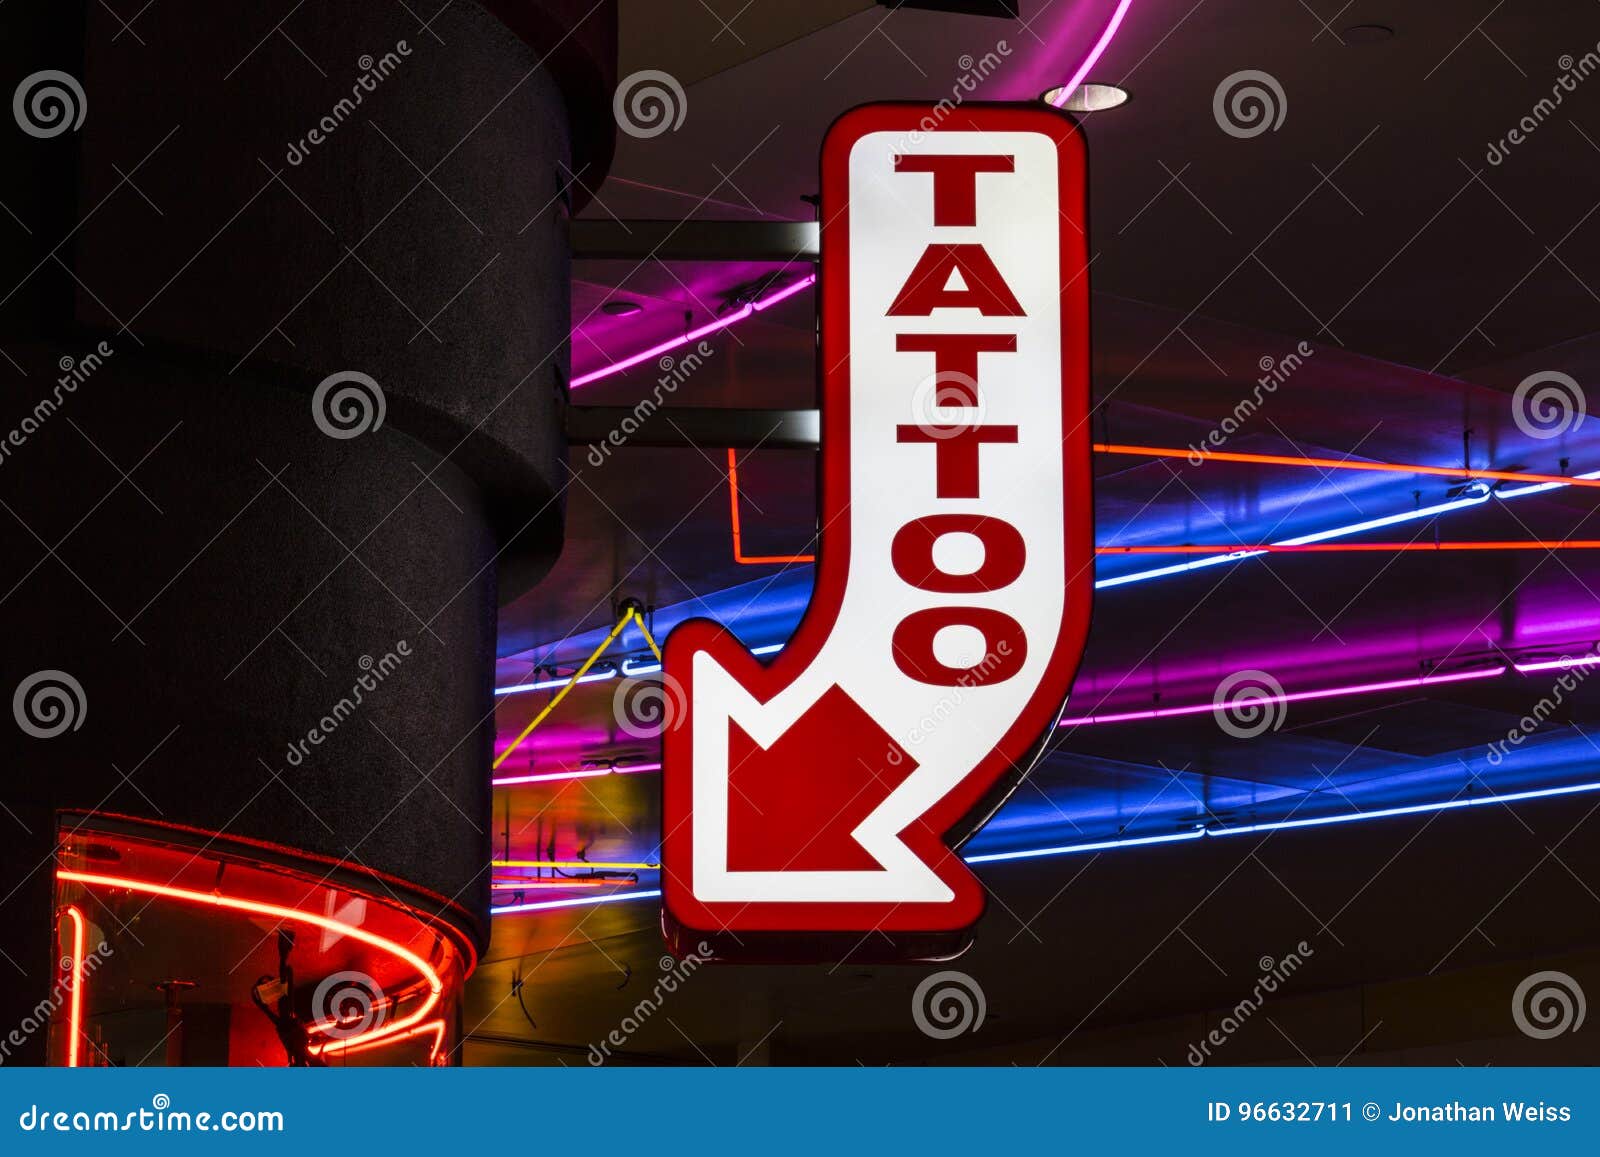 Tattoo Store Neon Signage  Free Stock Photo